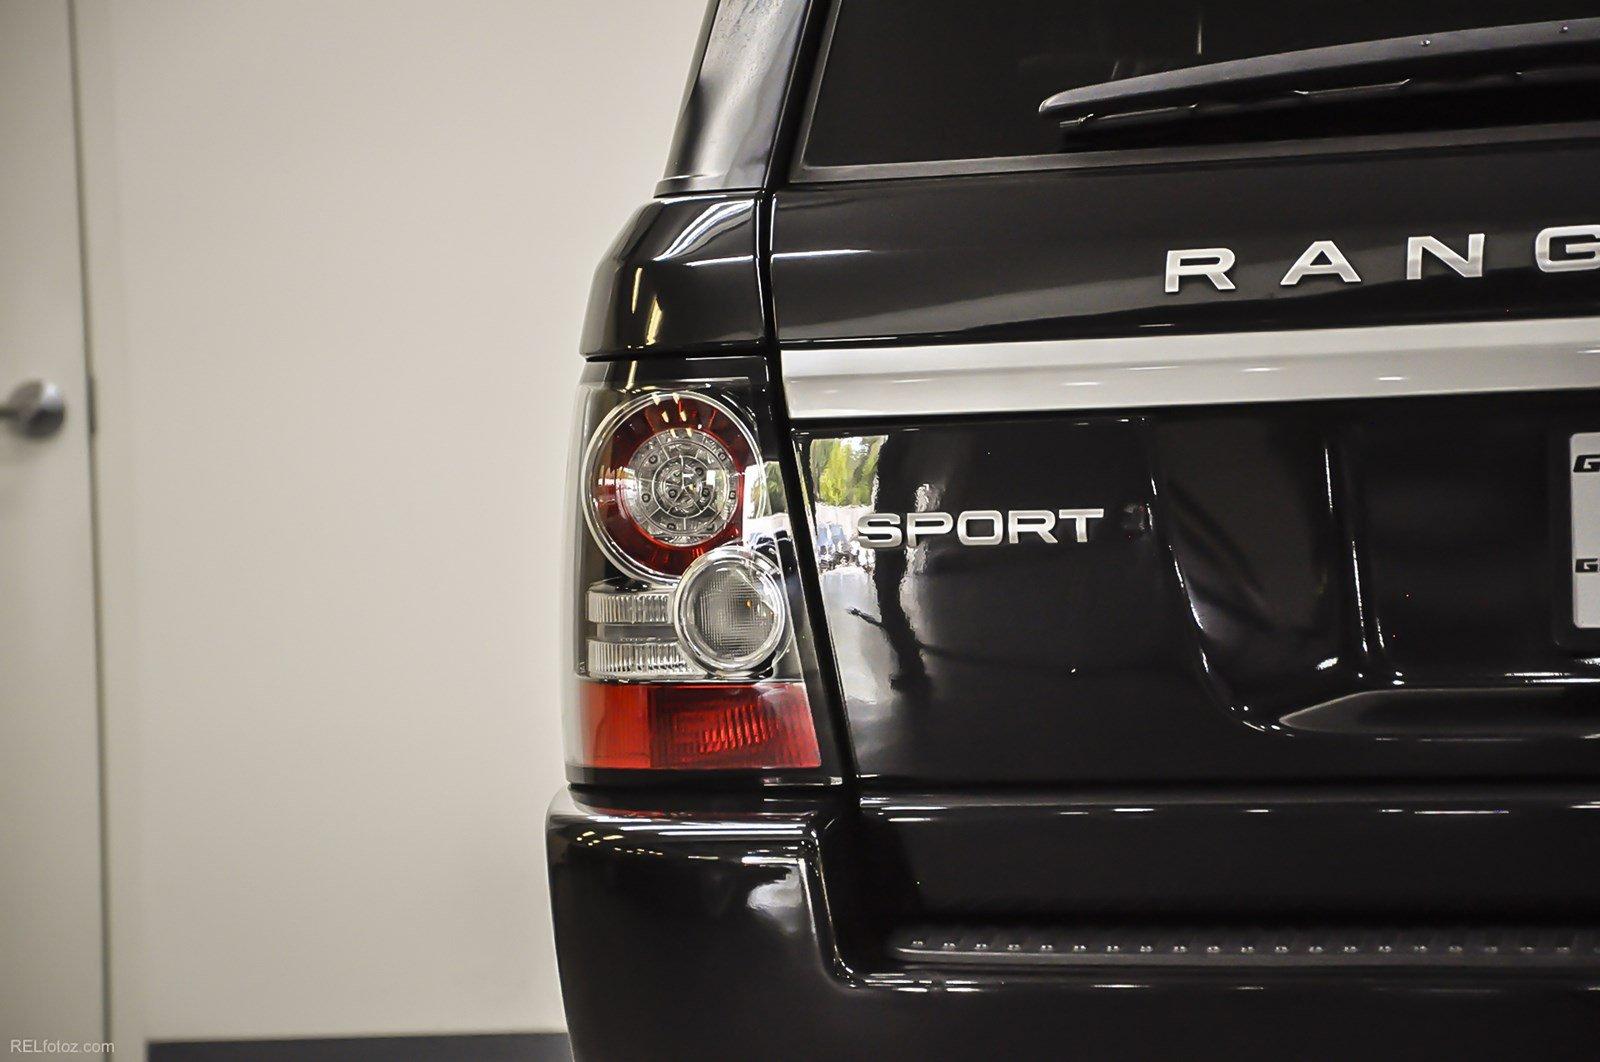 Used 2012 Land Rover Range Rover Sport HSE LUX for sale Sold at Gravity Autos Marietta in Marietta GA 30060 6